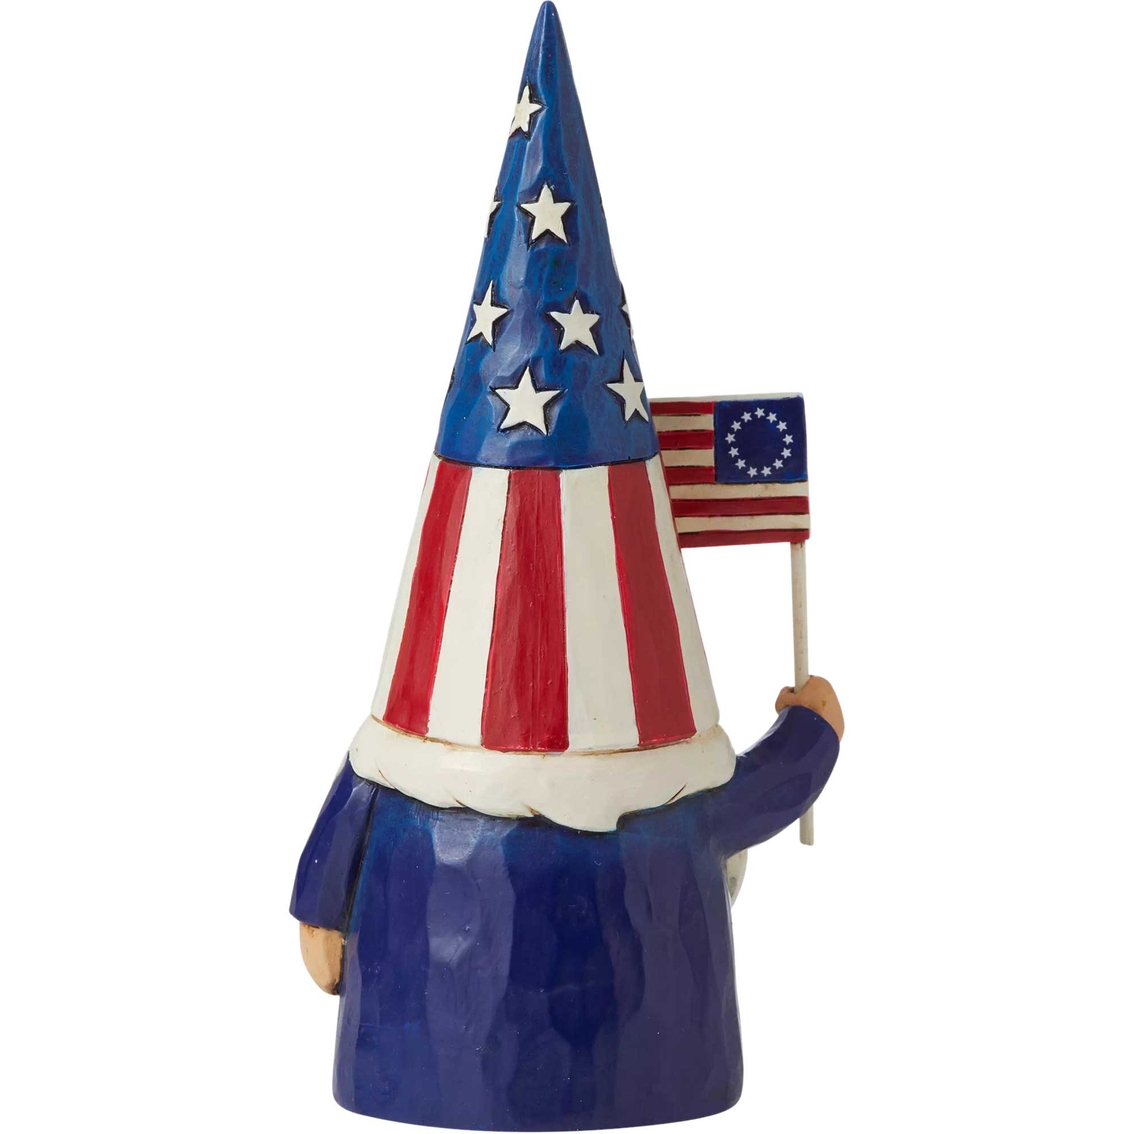 Jim Shore Heartwood Creek American Gnome Figurine - Image 2 of 3